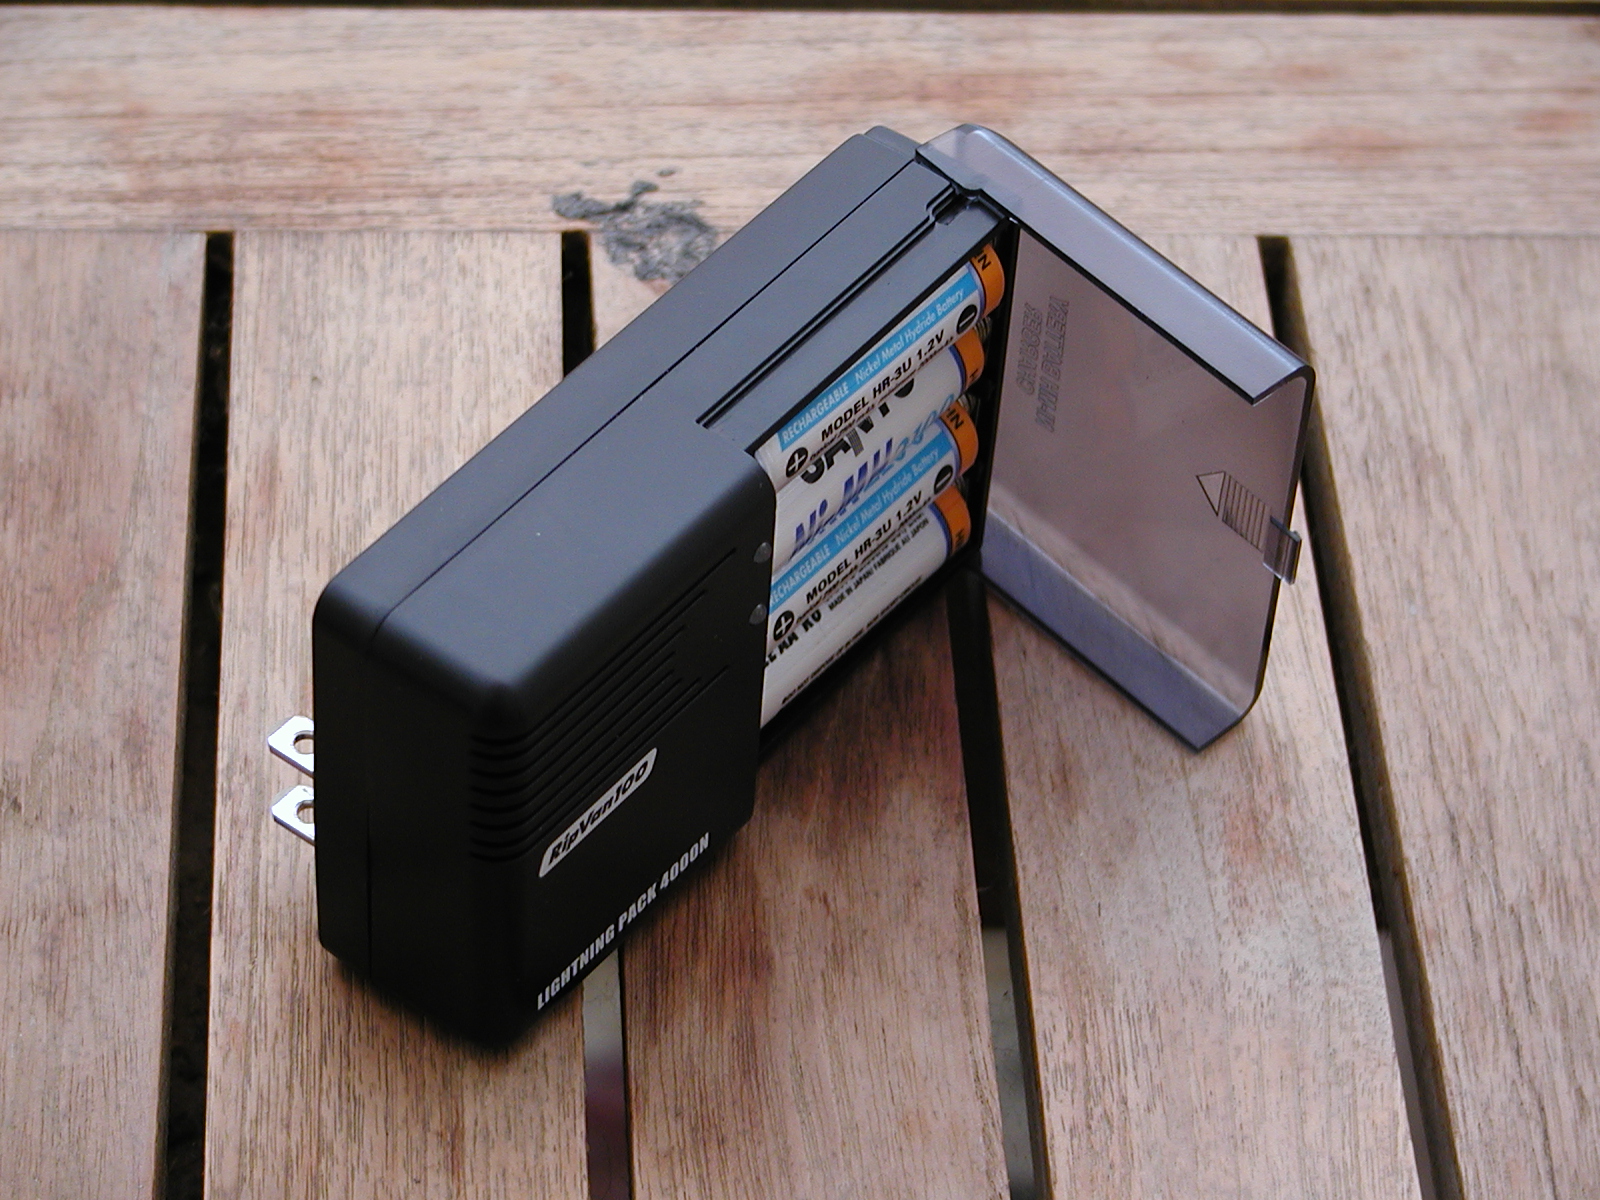 Lightning 4000N charger and Sanyo 2100 maH batteries